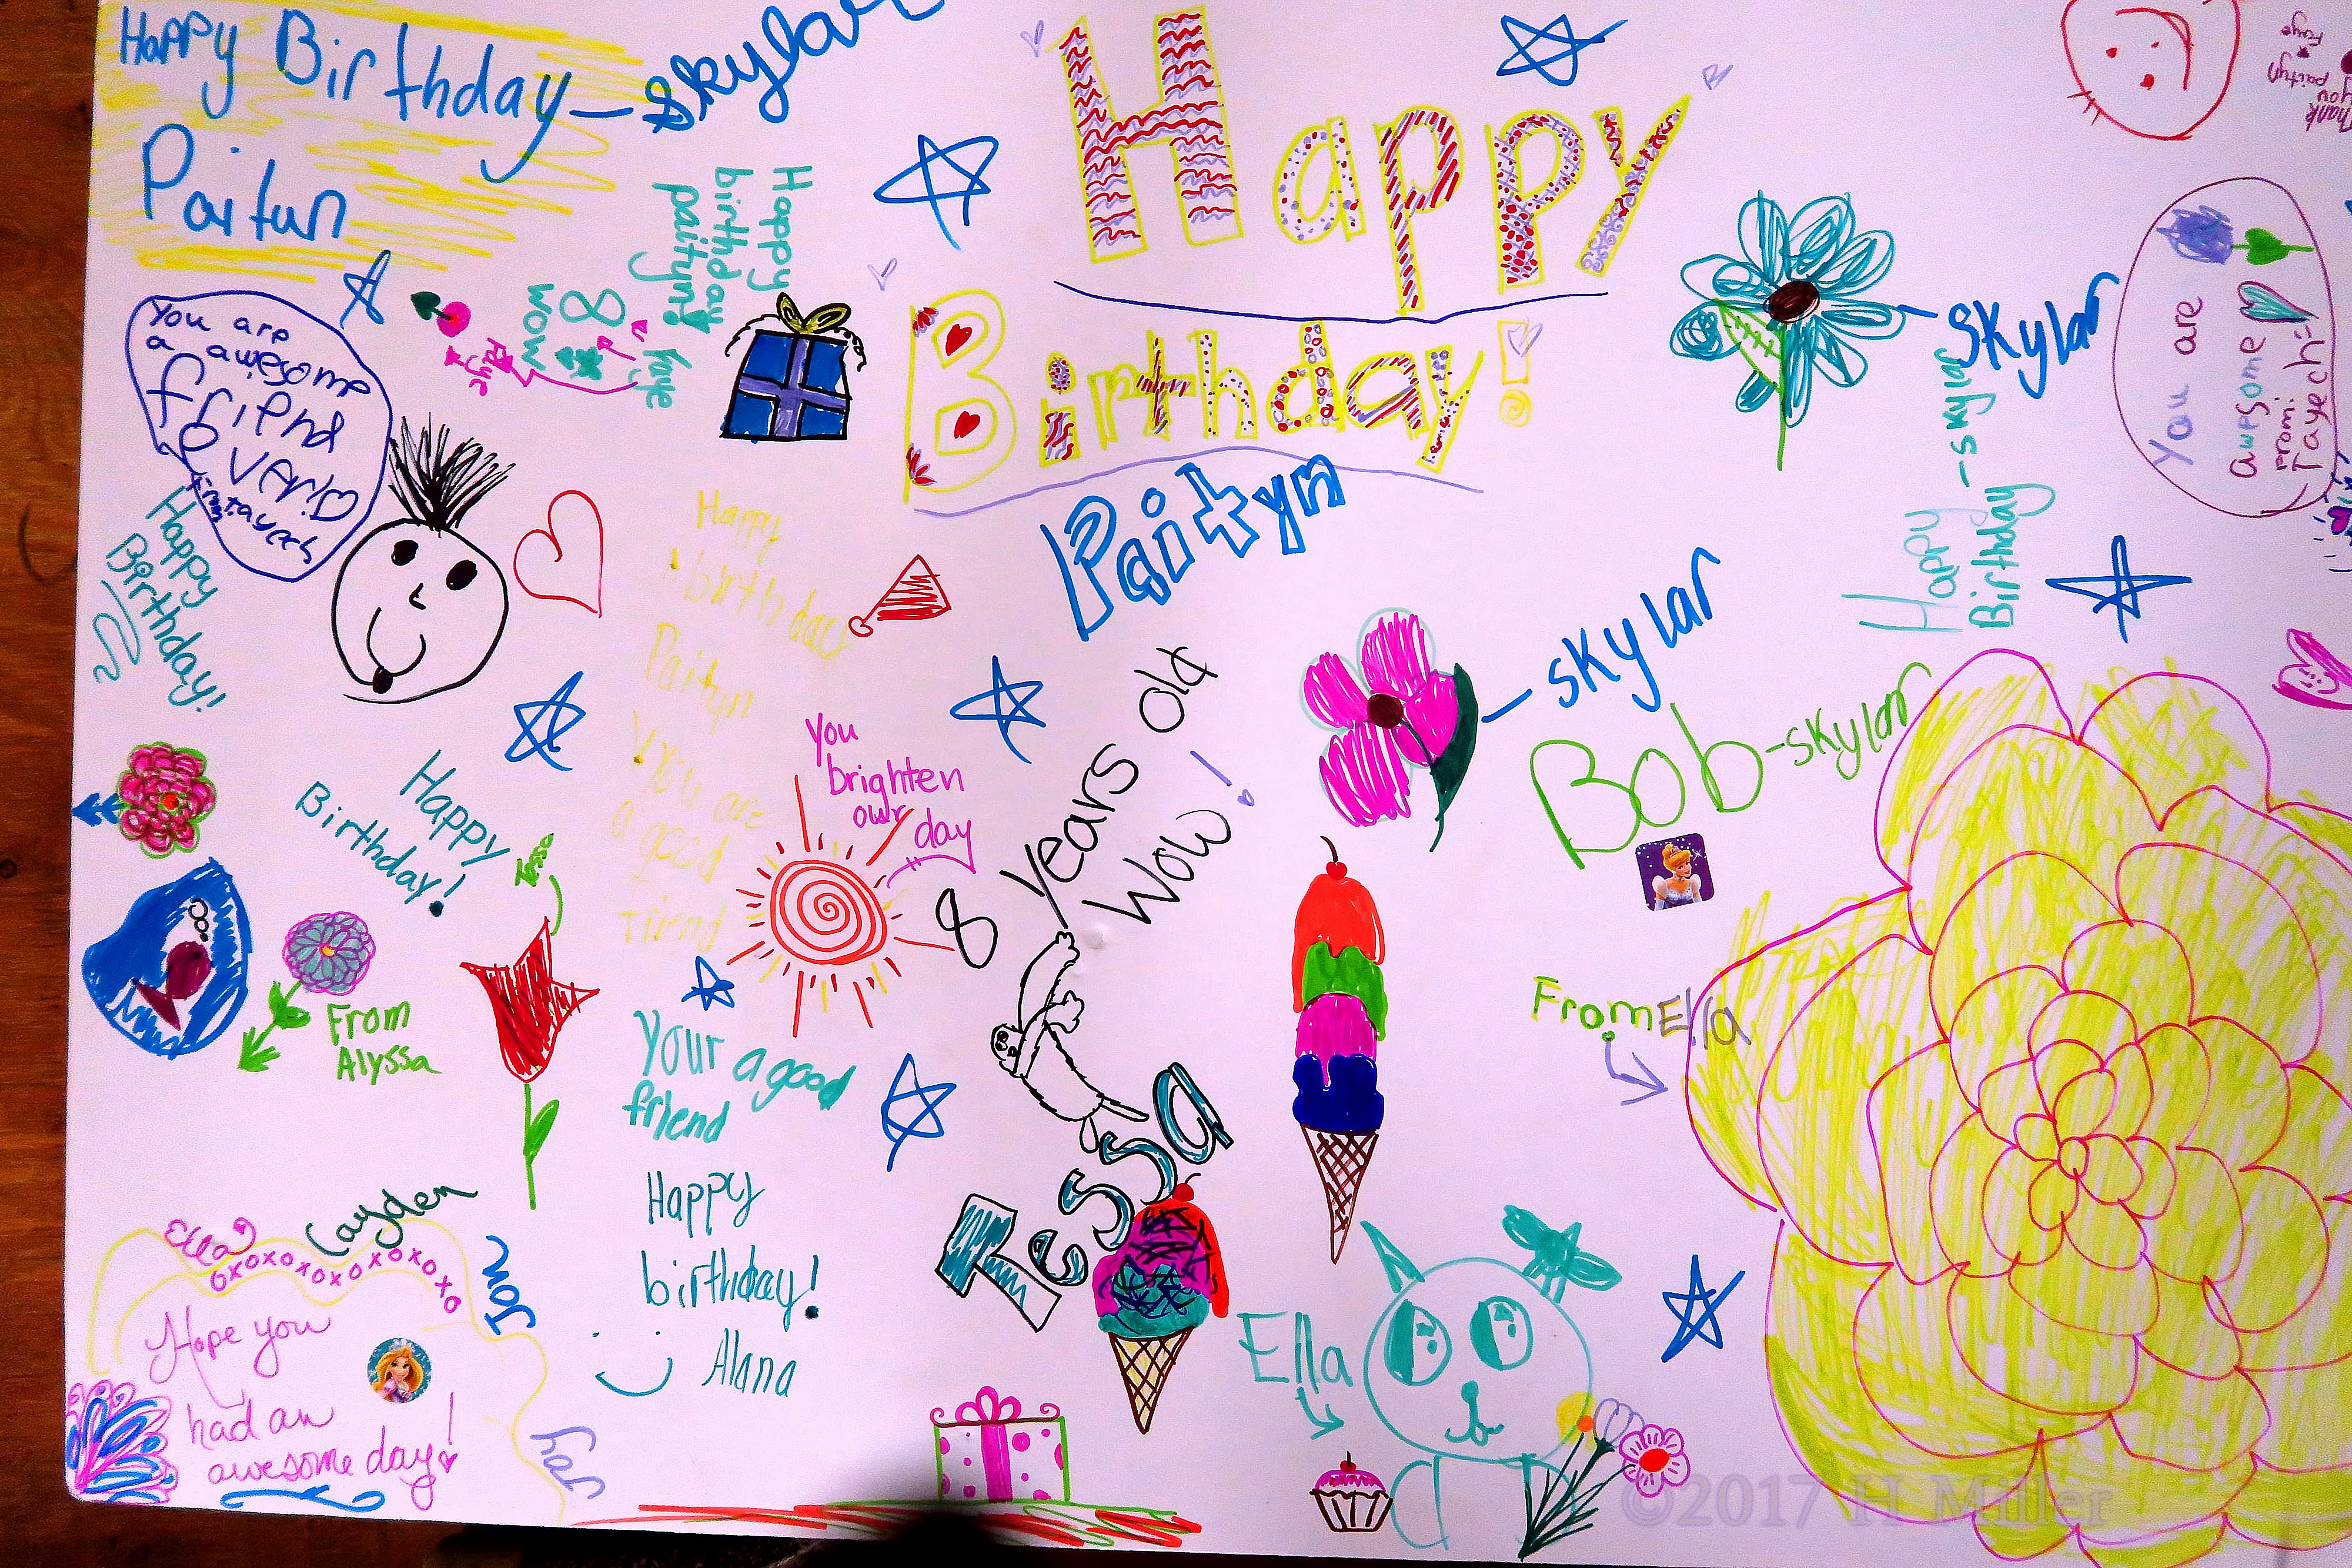 Happy Birthday Paityn! What A Fabulous Kids Spa Birthday Card! 4